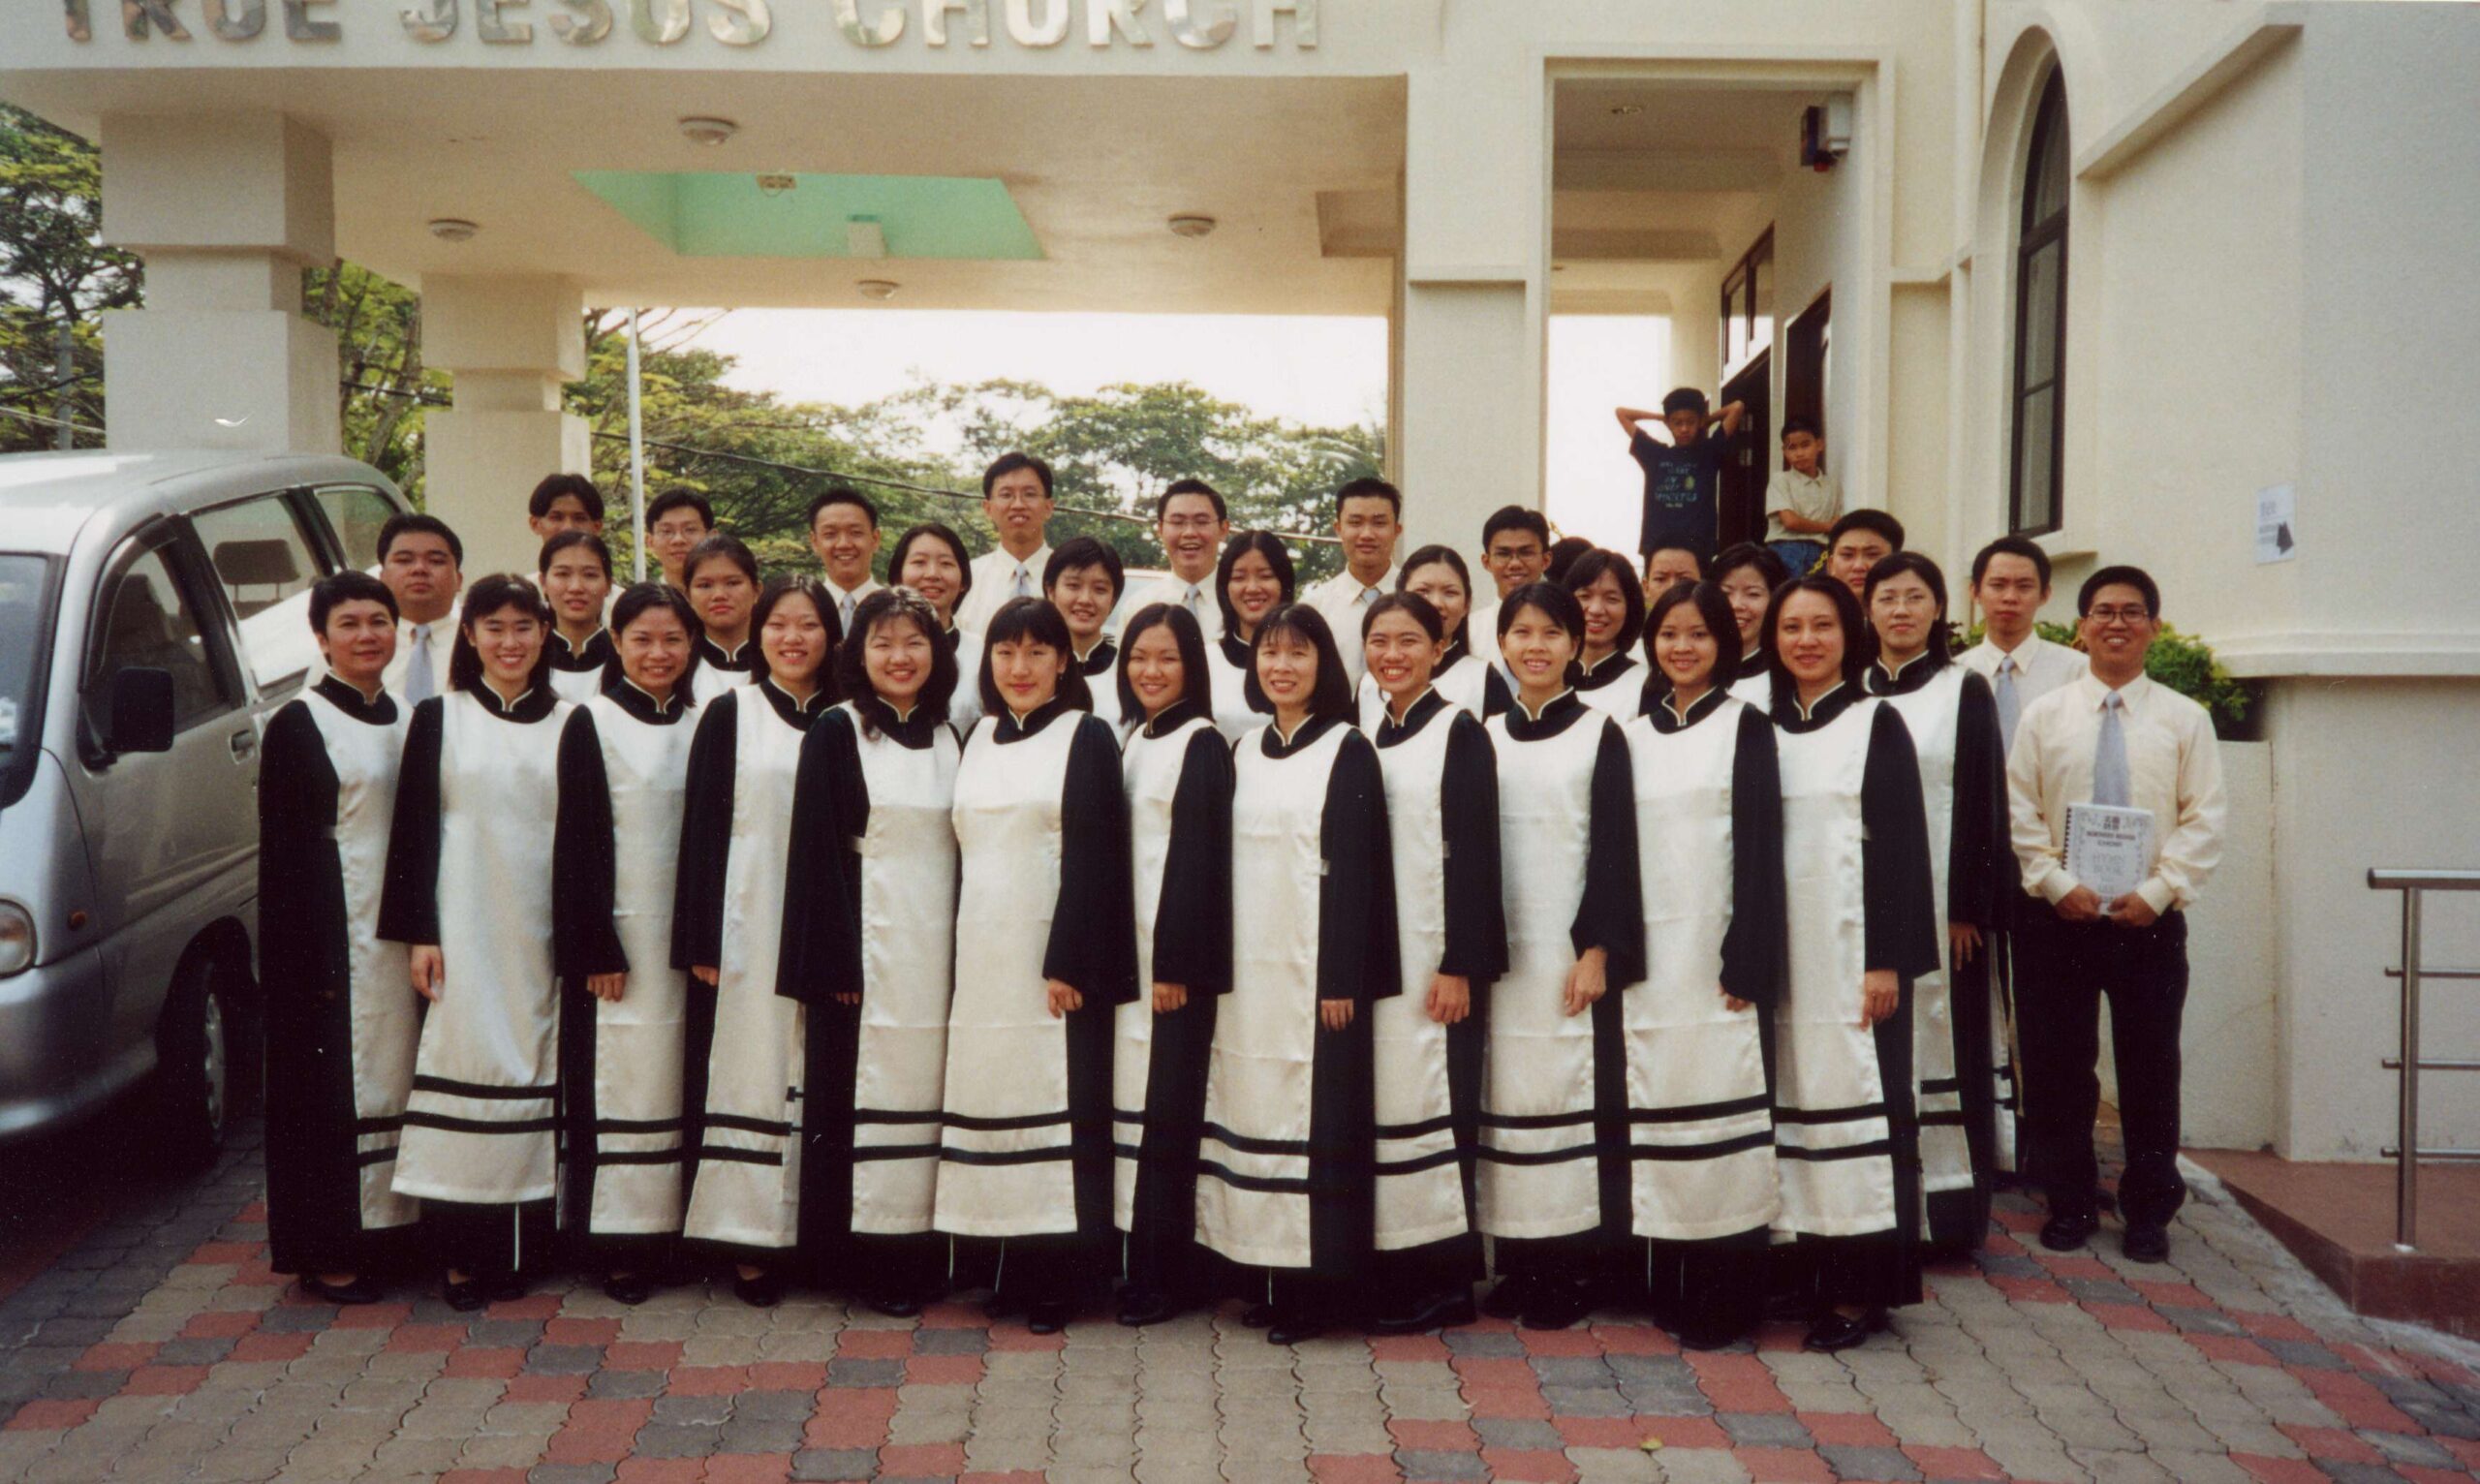 Dedication - Choir Group Photo